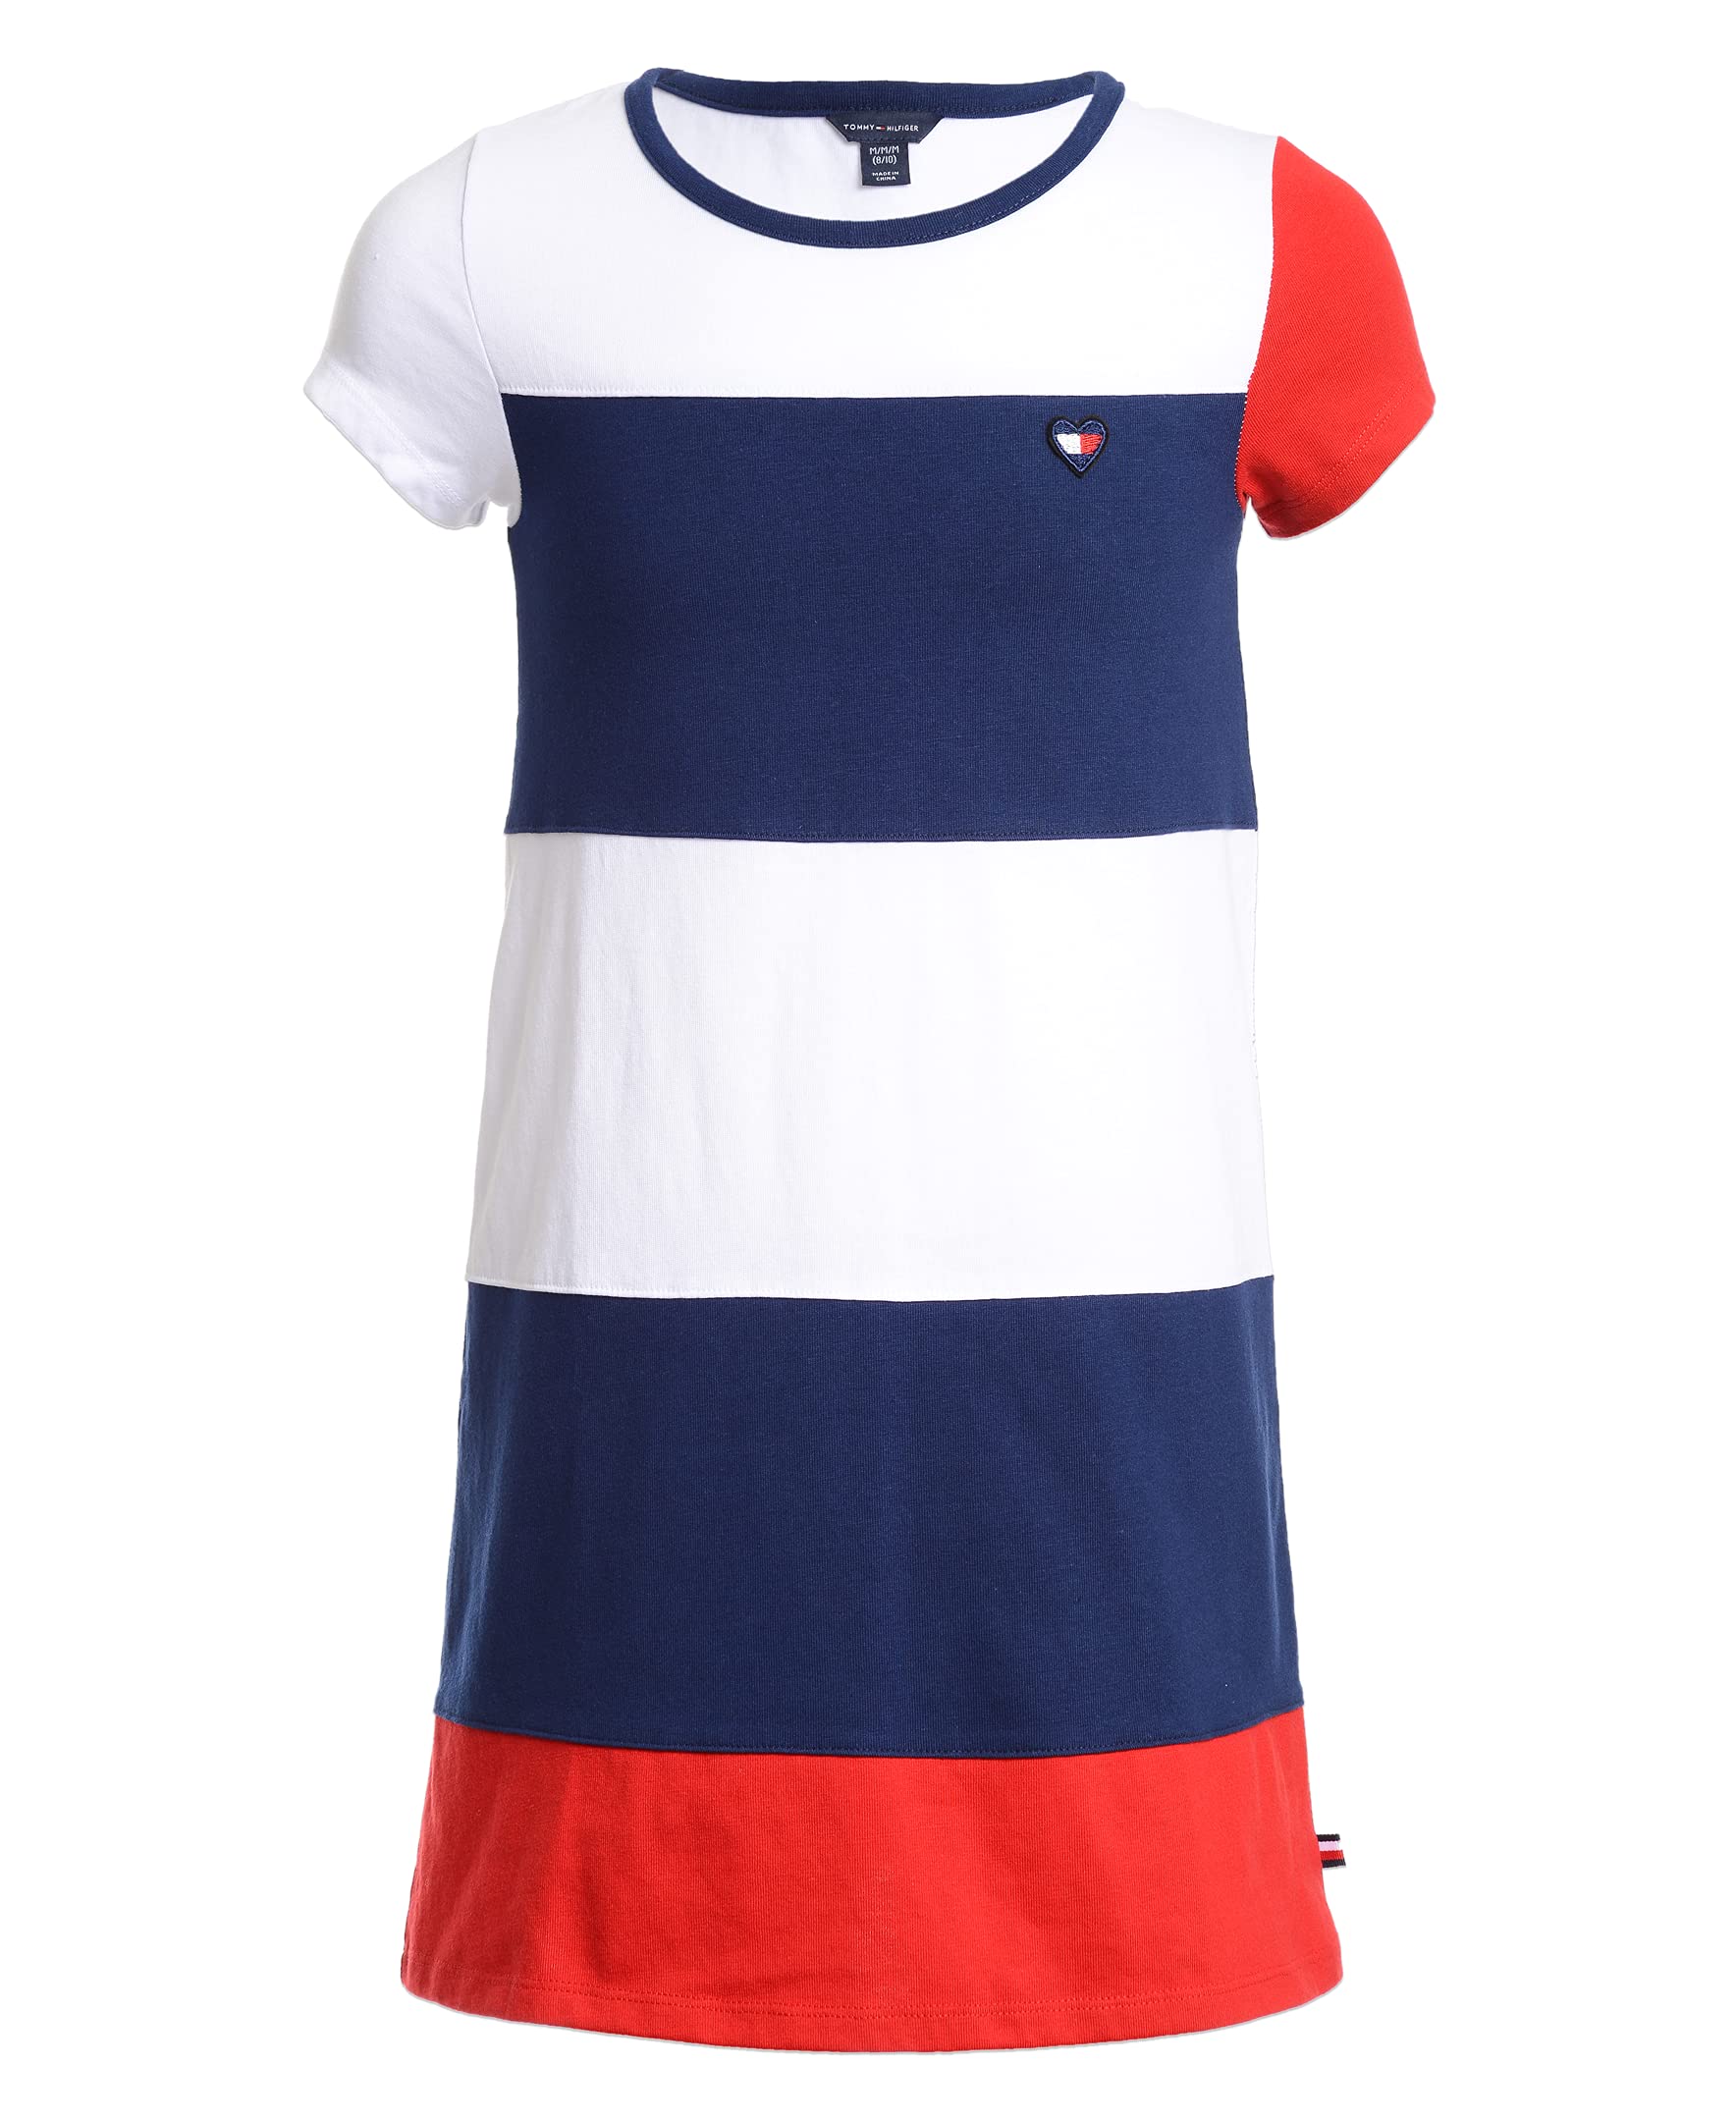 Tommy Hilfiger Girls' Short Sleeve Colorblocked Jersey Dress